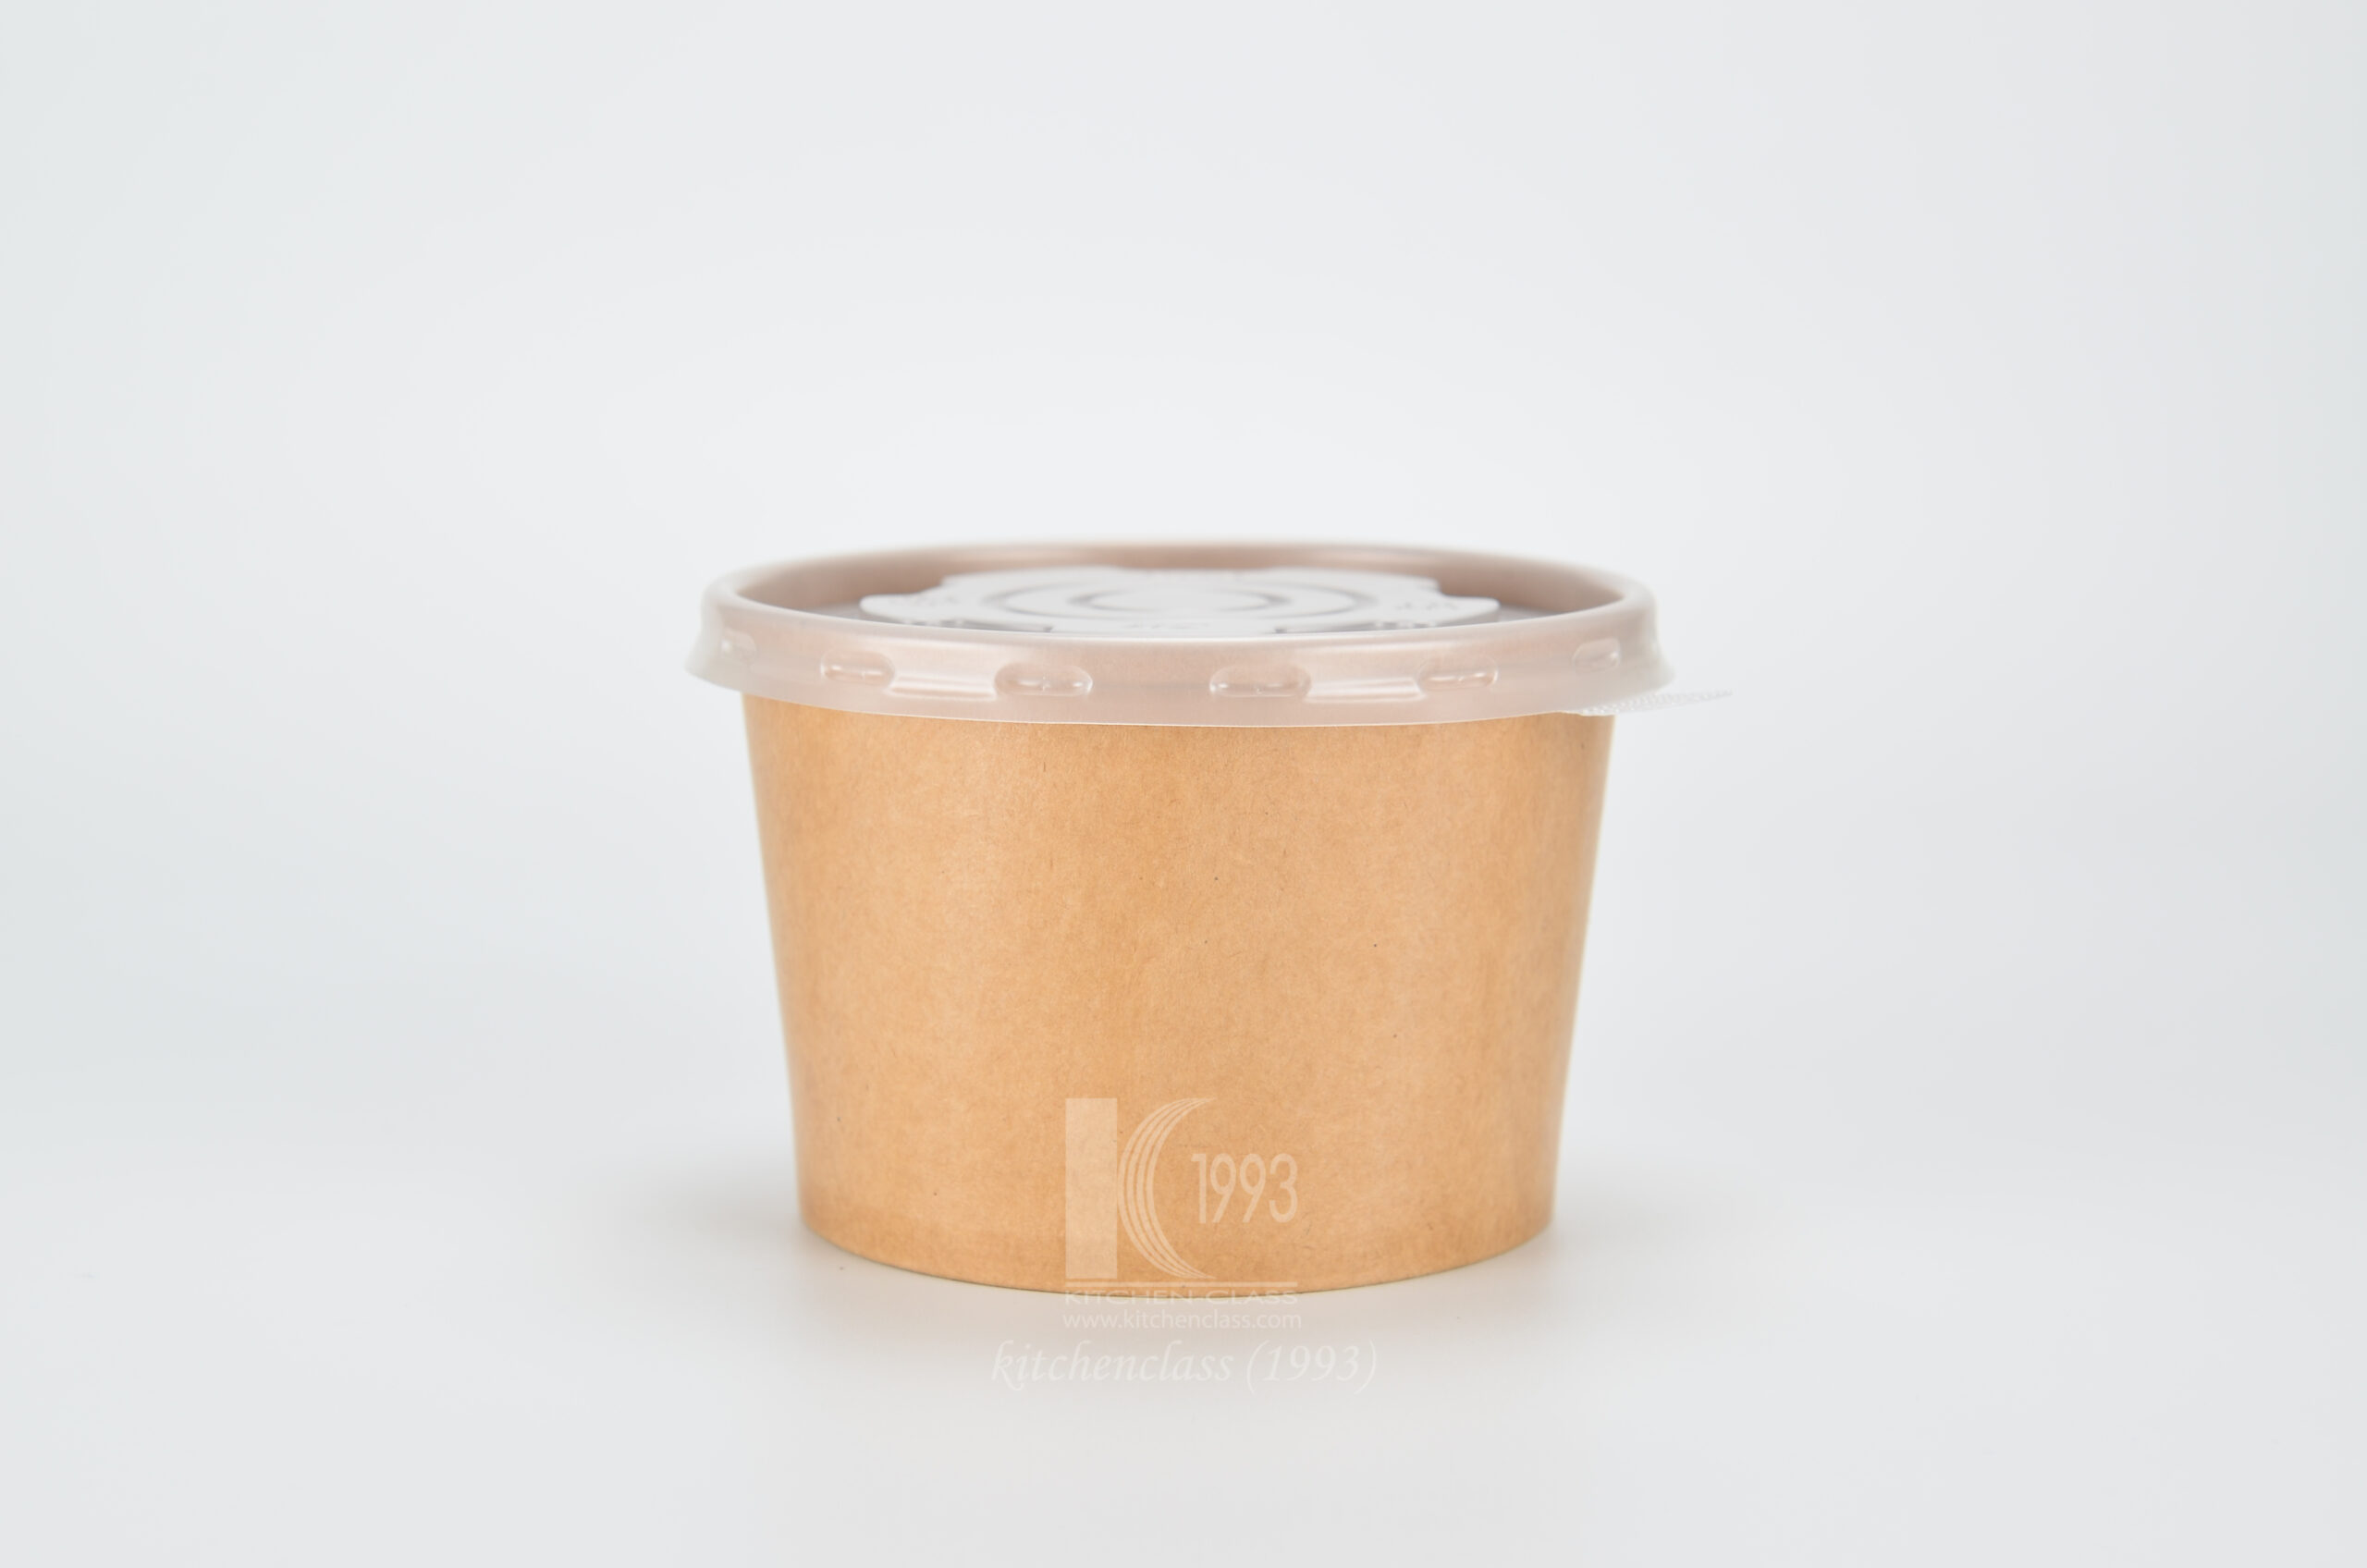 Paper Soup Bowl with Lid Kraft PP 16 Oz/473ml (500 Units)